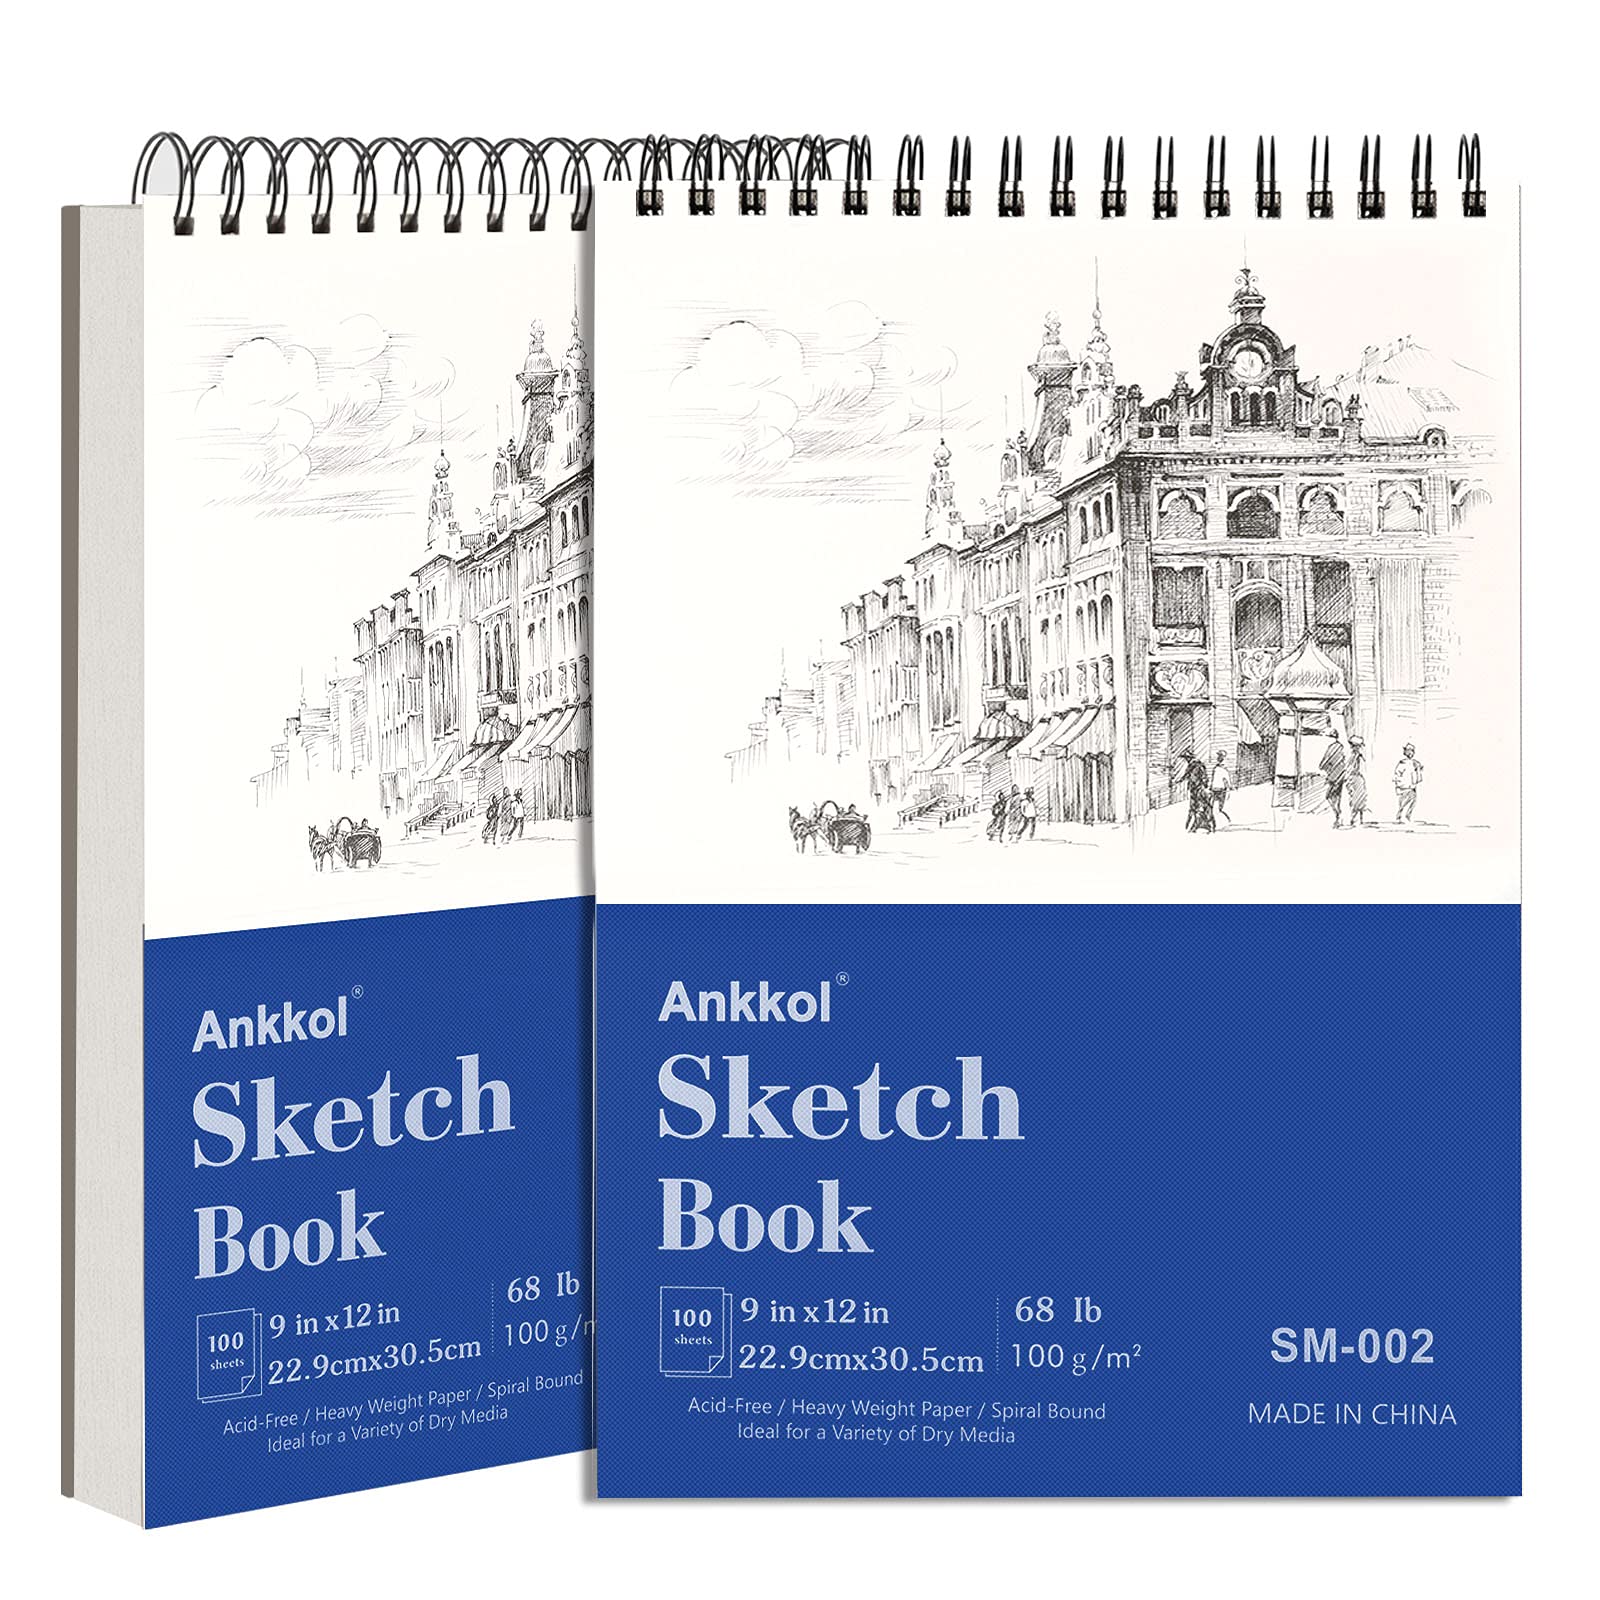 ankkol sketch book 9x12 inch, artist sketch pad, 100 sheets (68lb/100gsm)  spiral bound sketchbook, acid-free drawing paper pad, art